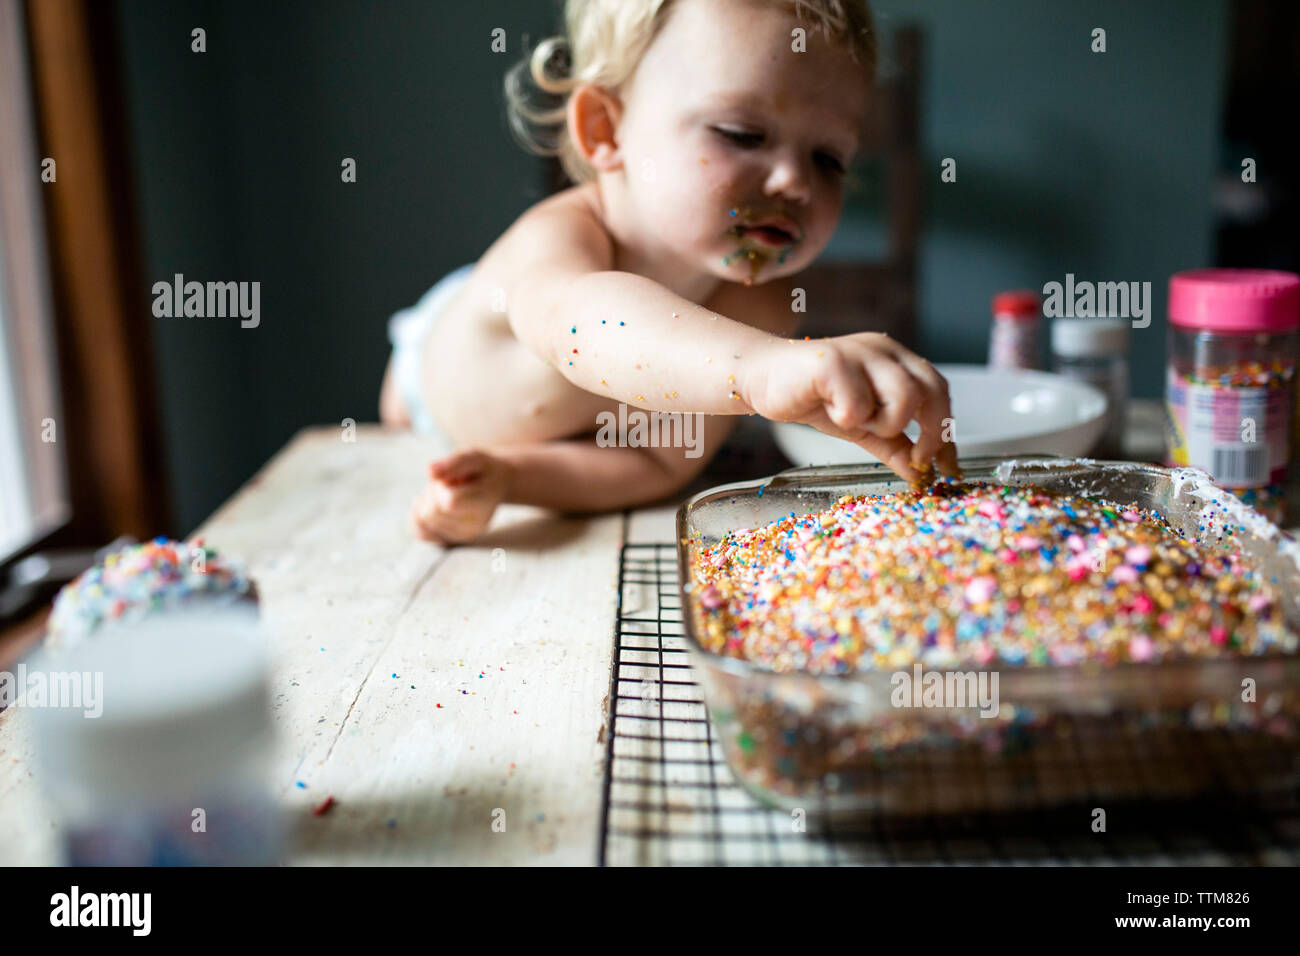 Toddler girl sneaking colorful sprinkles off of freshly baked cake Stock Photo